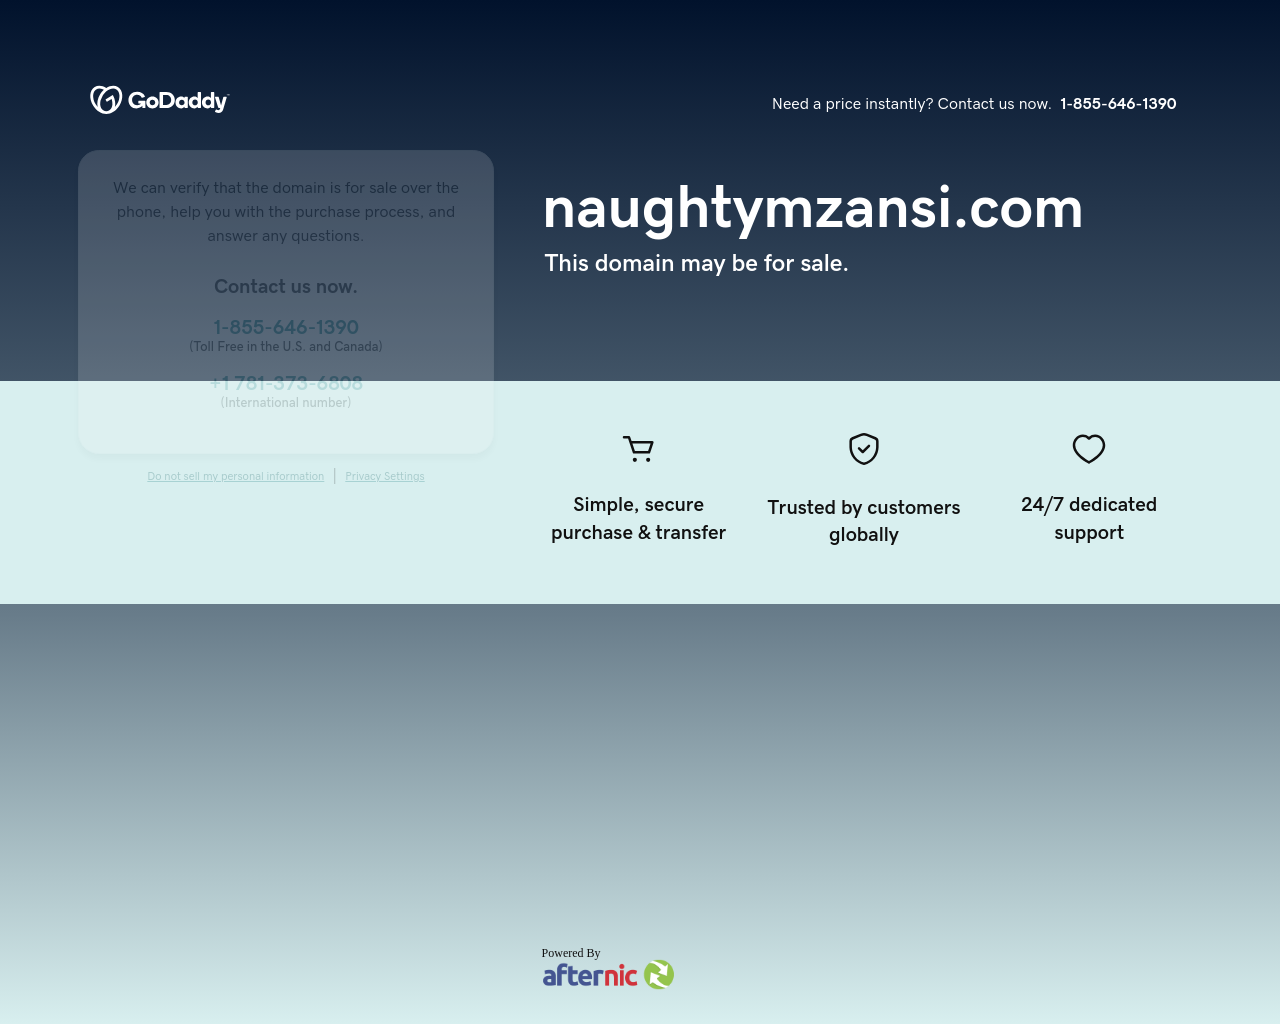 naughtymzansi.com